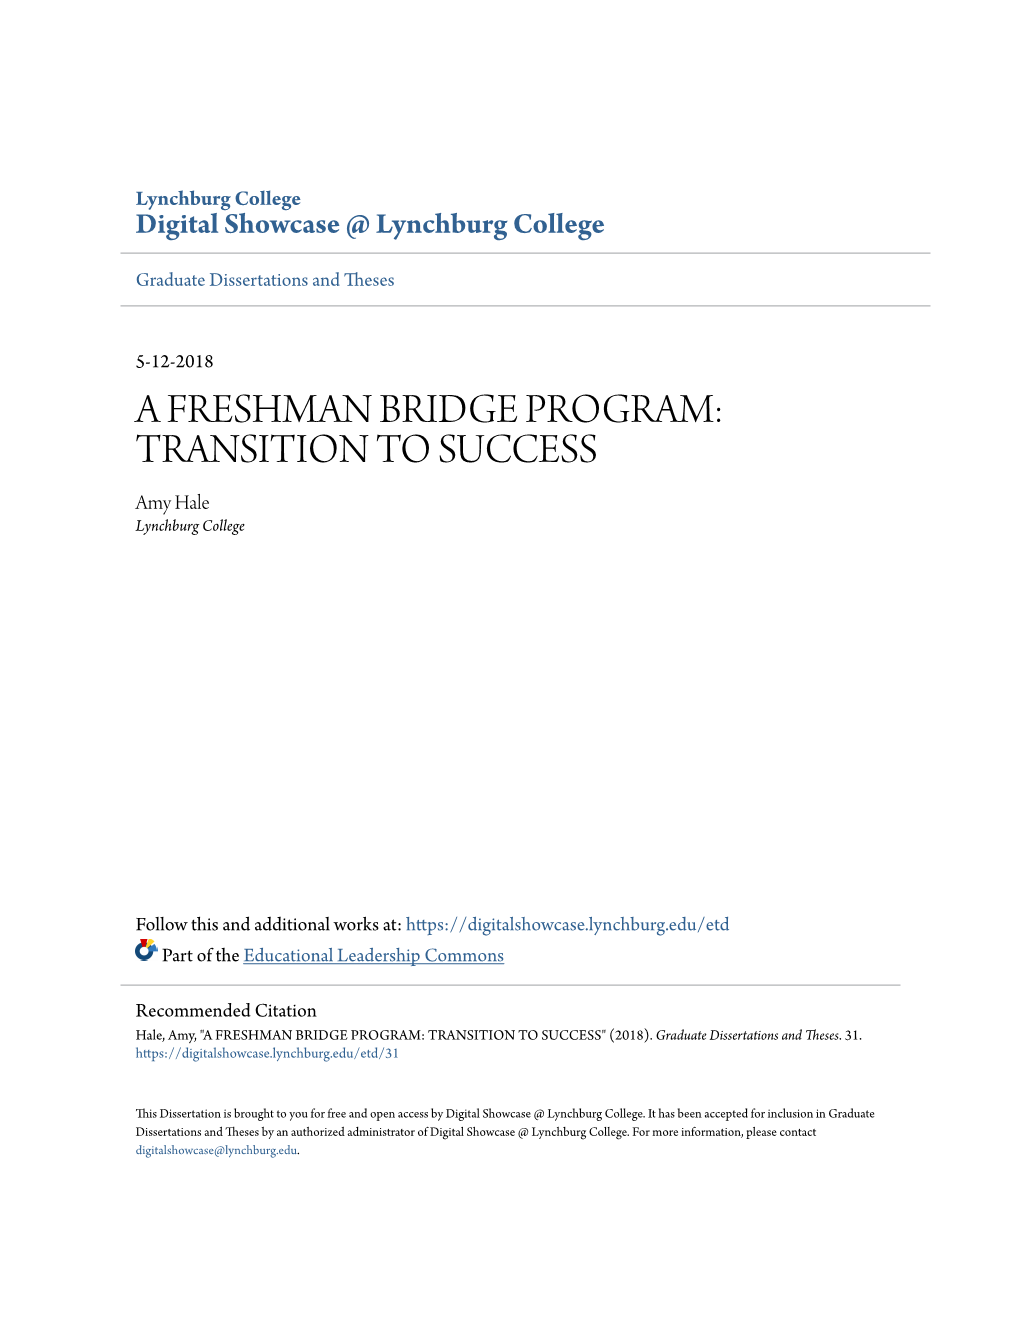 A FRESHMAN BRIDGE PROGRAM: TRANSITION to SUCCESS Amy Hale Lynchburg College